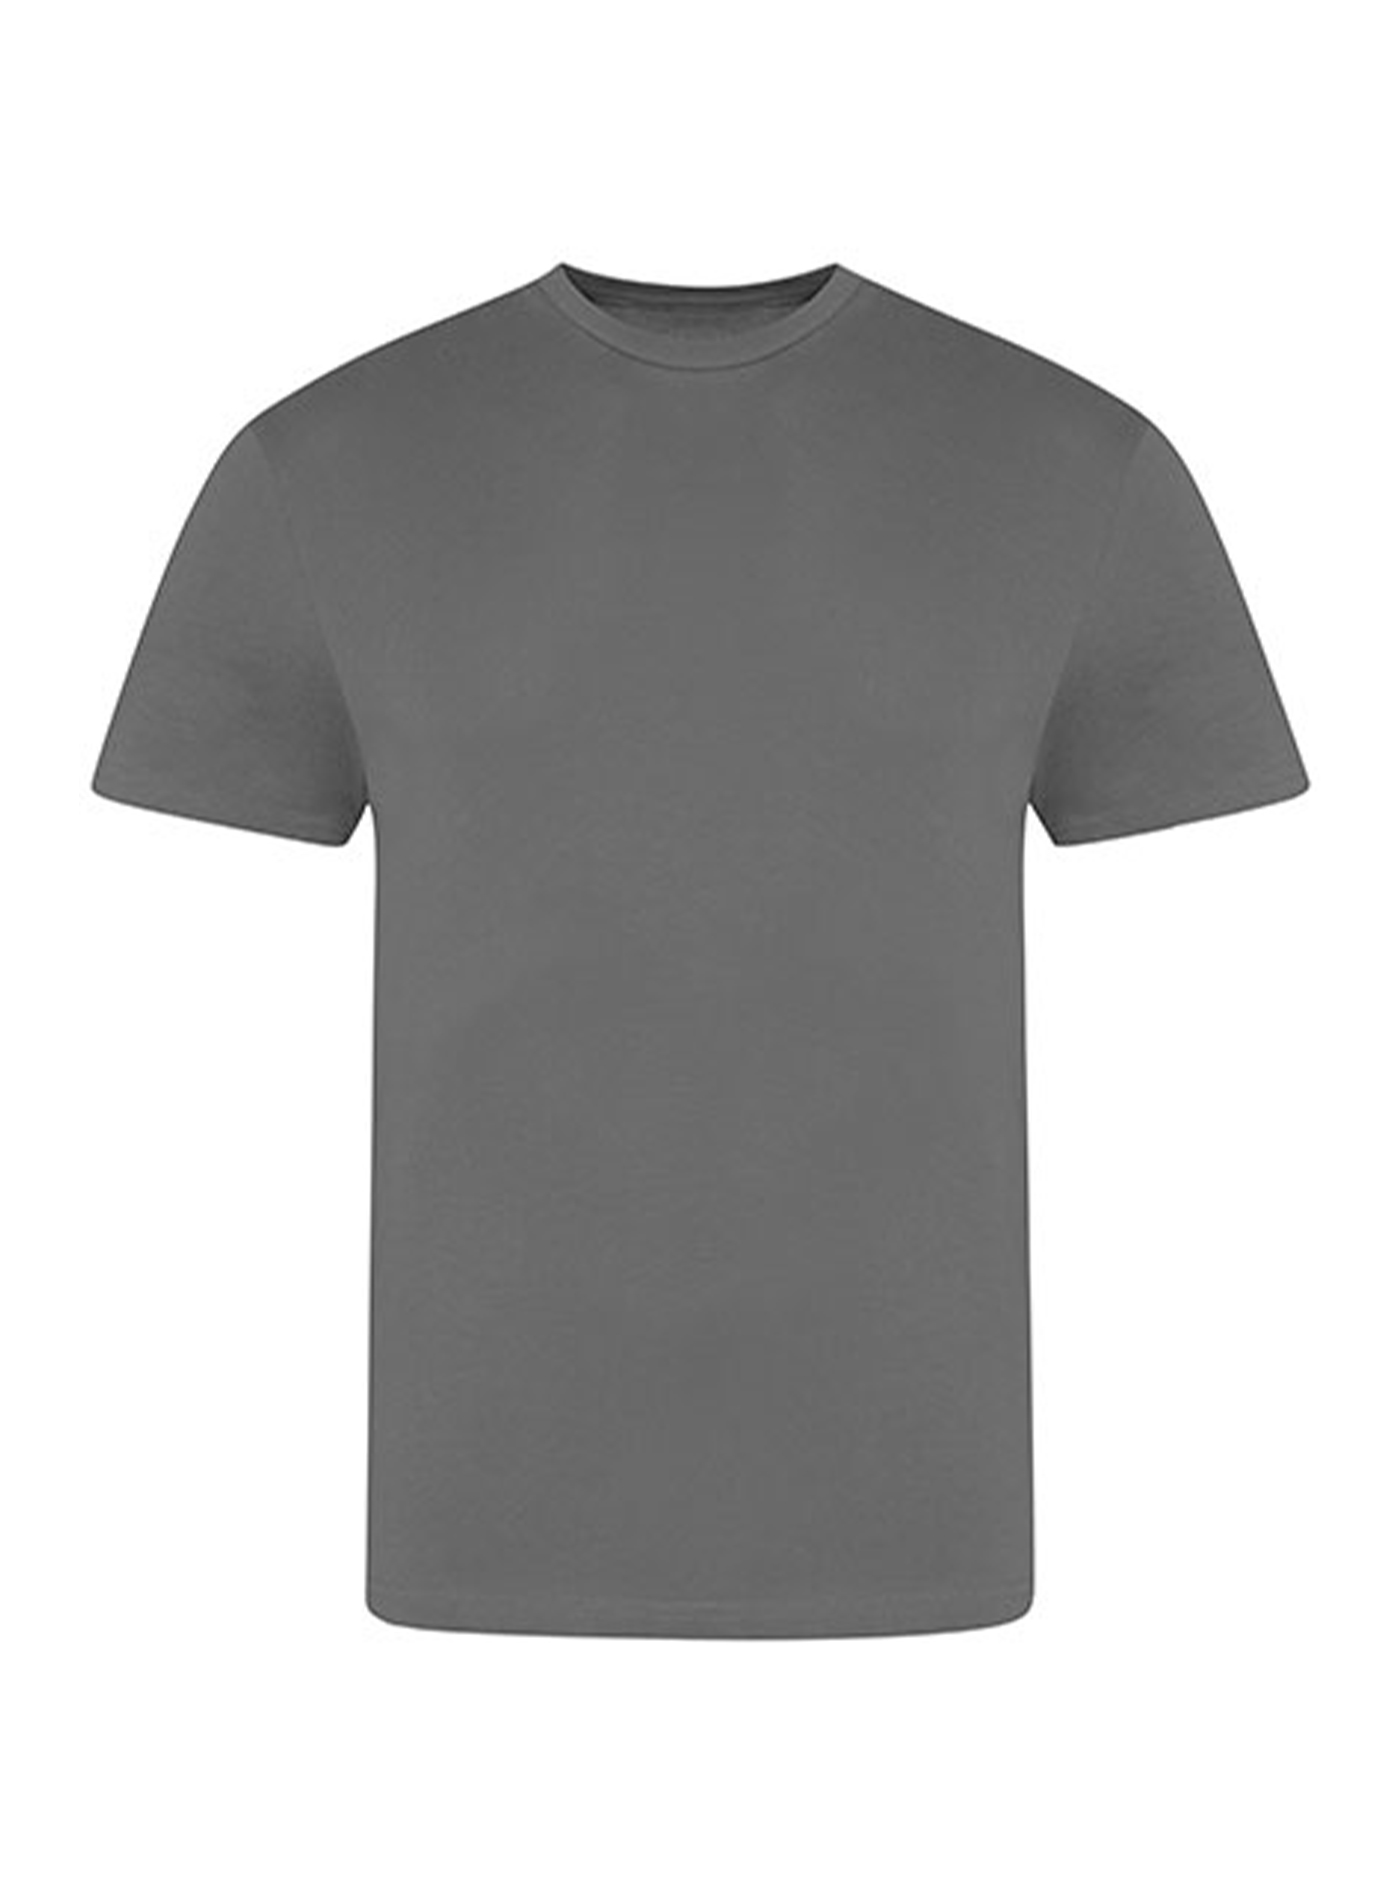 Pánské tričko Just Ts - Charcoal M